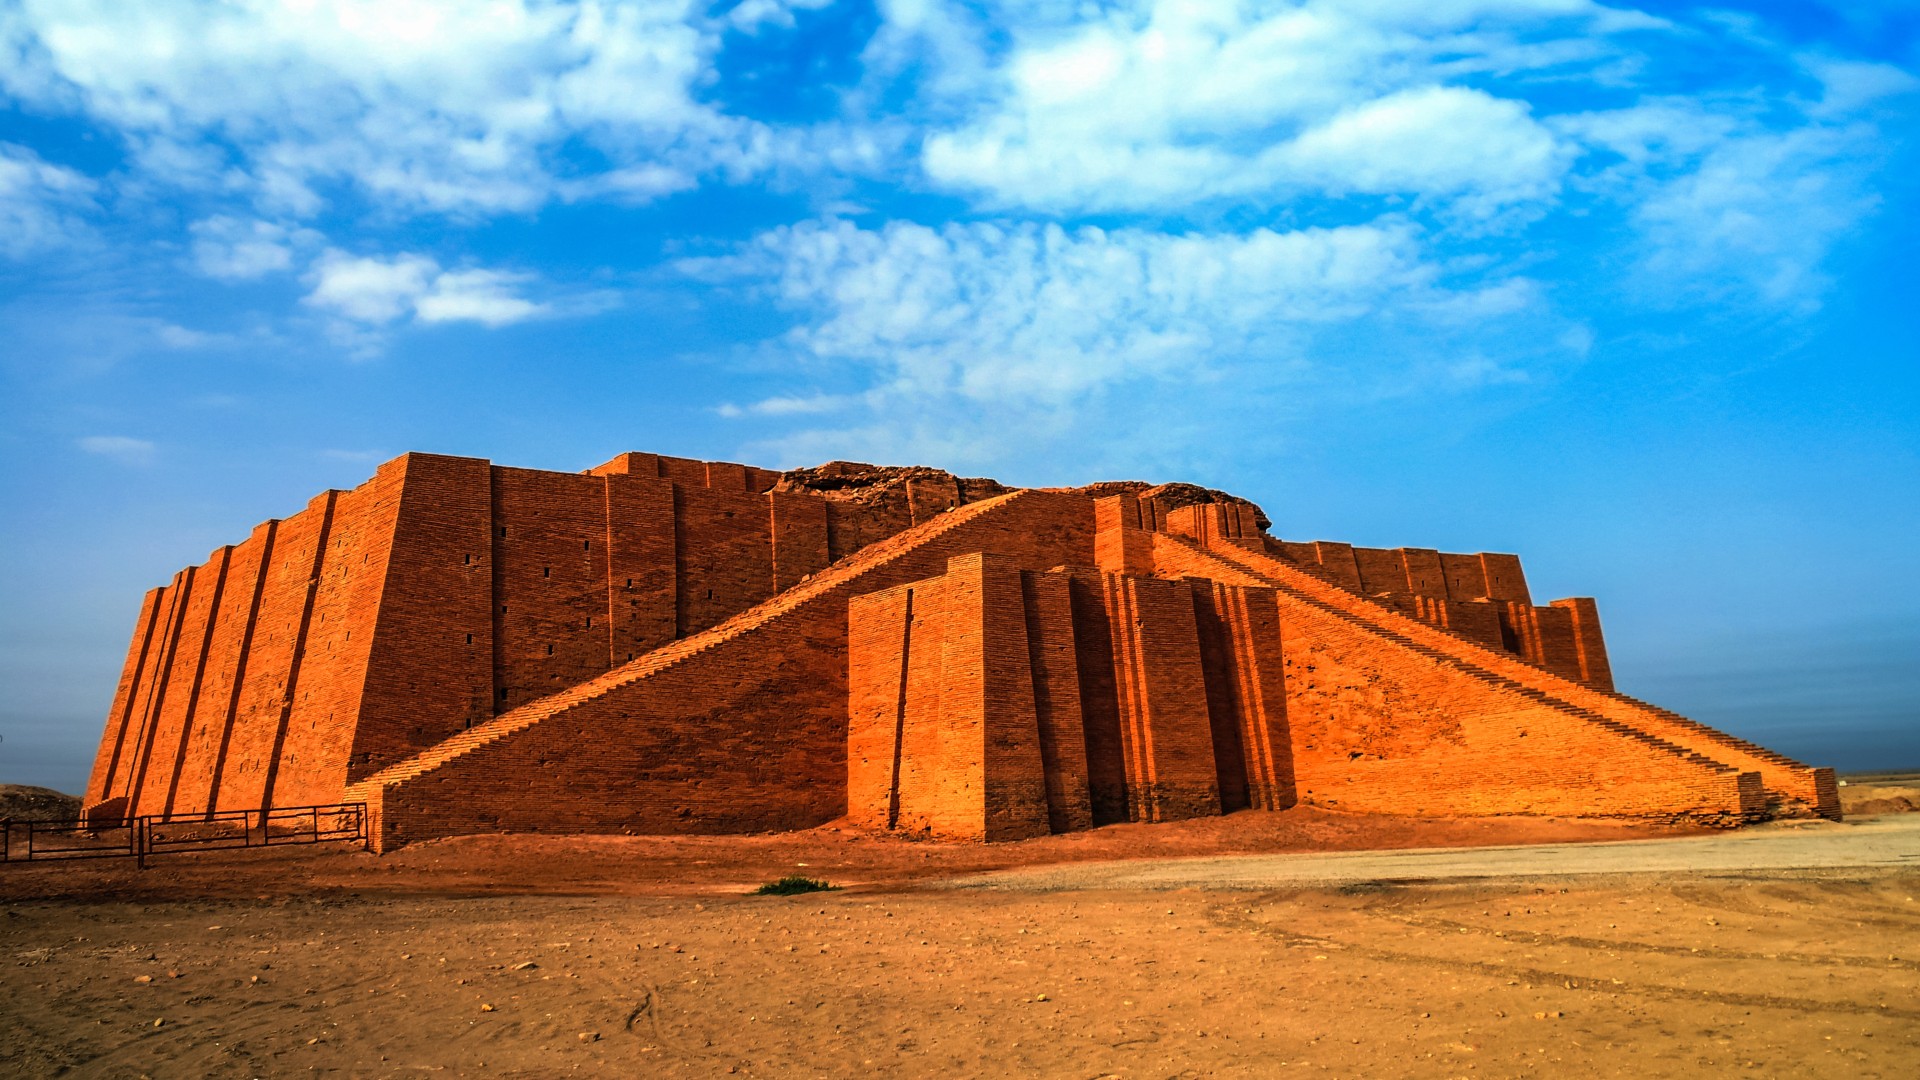 A restored Ziggurat of Ur in Iraq.